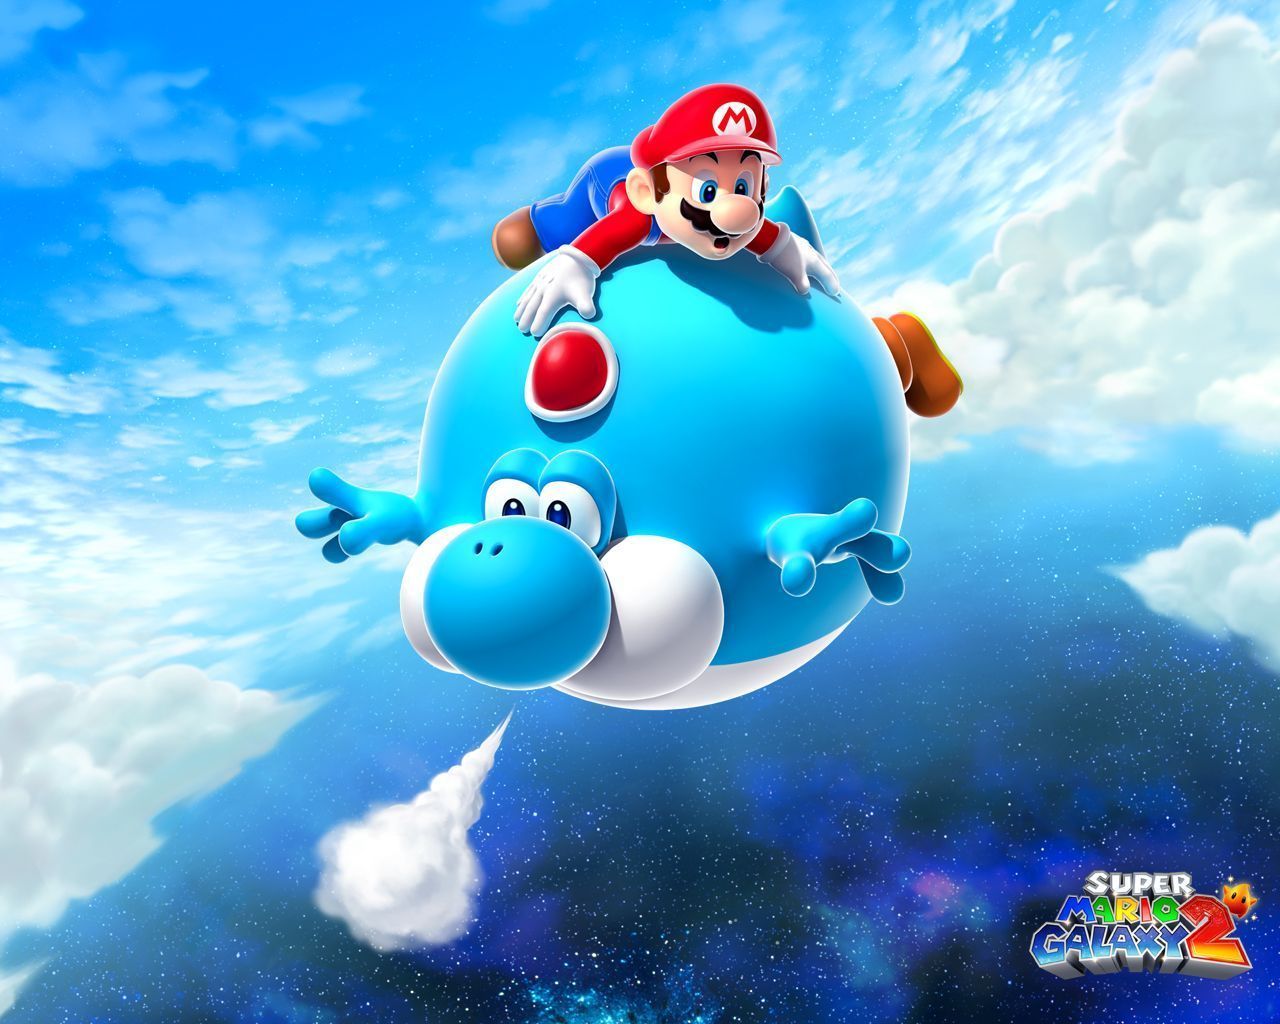 TMK Downloads Images Wallpaper Super Mario Galaxy 2 Wii